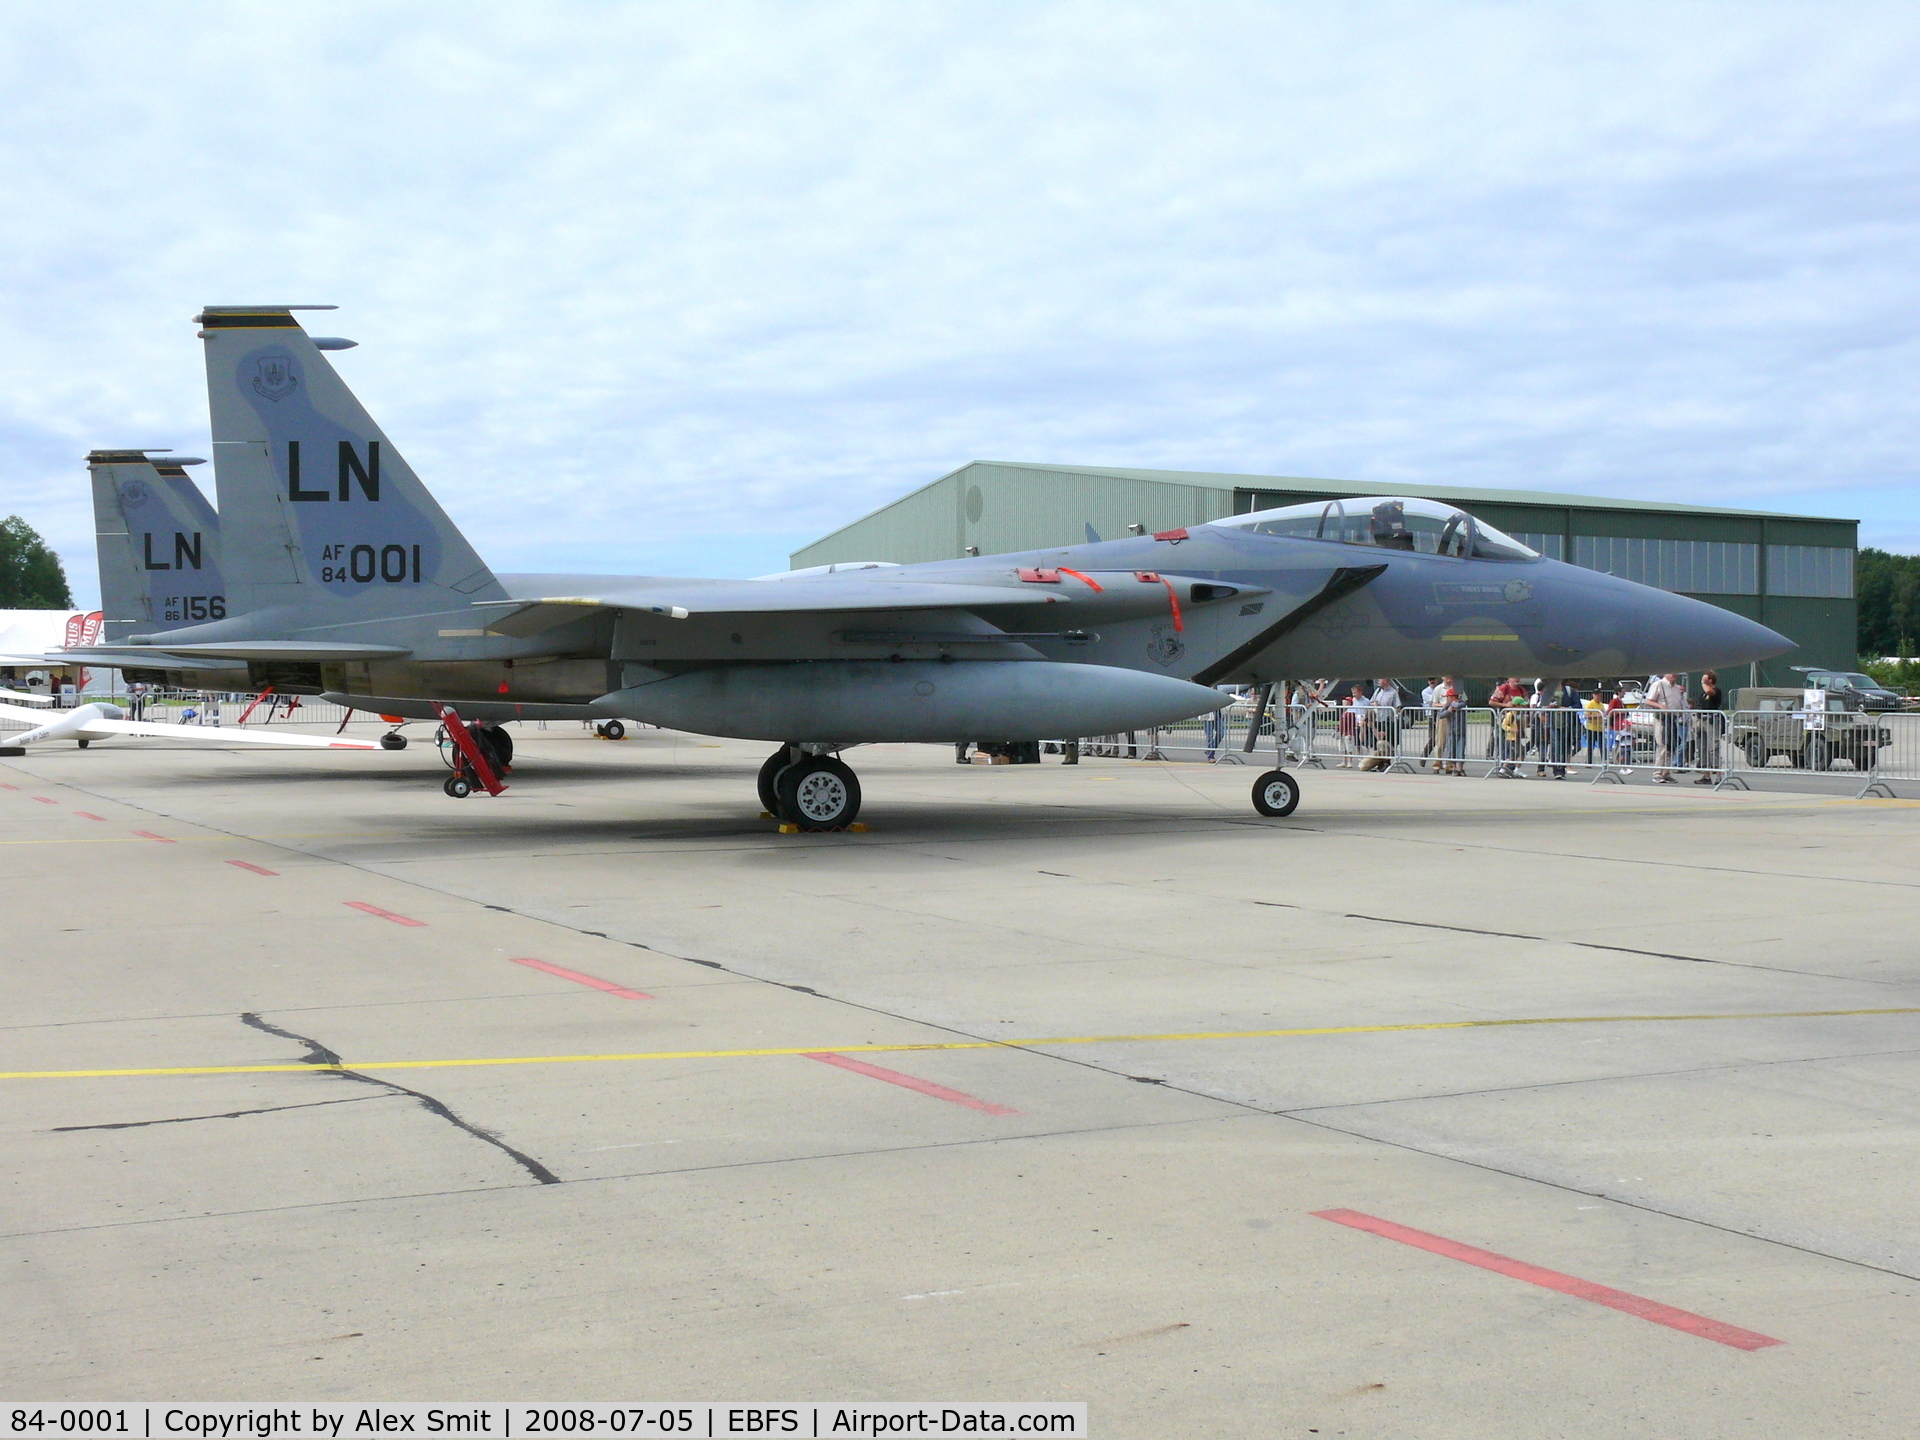 84-0001, 1984 McDonnell Douglas F-15C Eagle C/N 0908/C304, McDonnell Douglas F-15C Eagle LN/84-0001 US Air Force --->picture #1000 uploaded to Airport-data.com<---